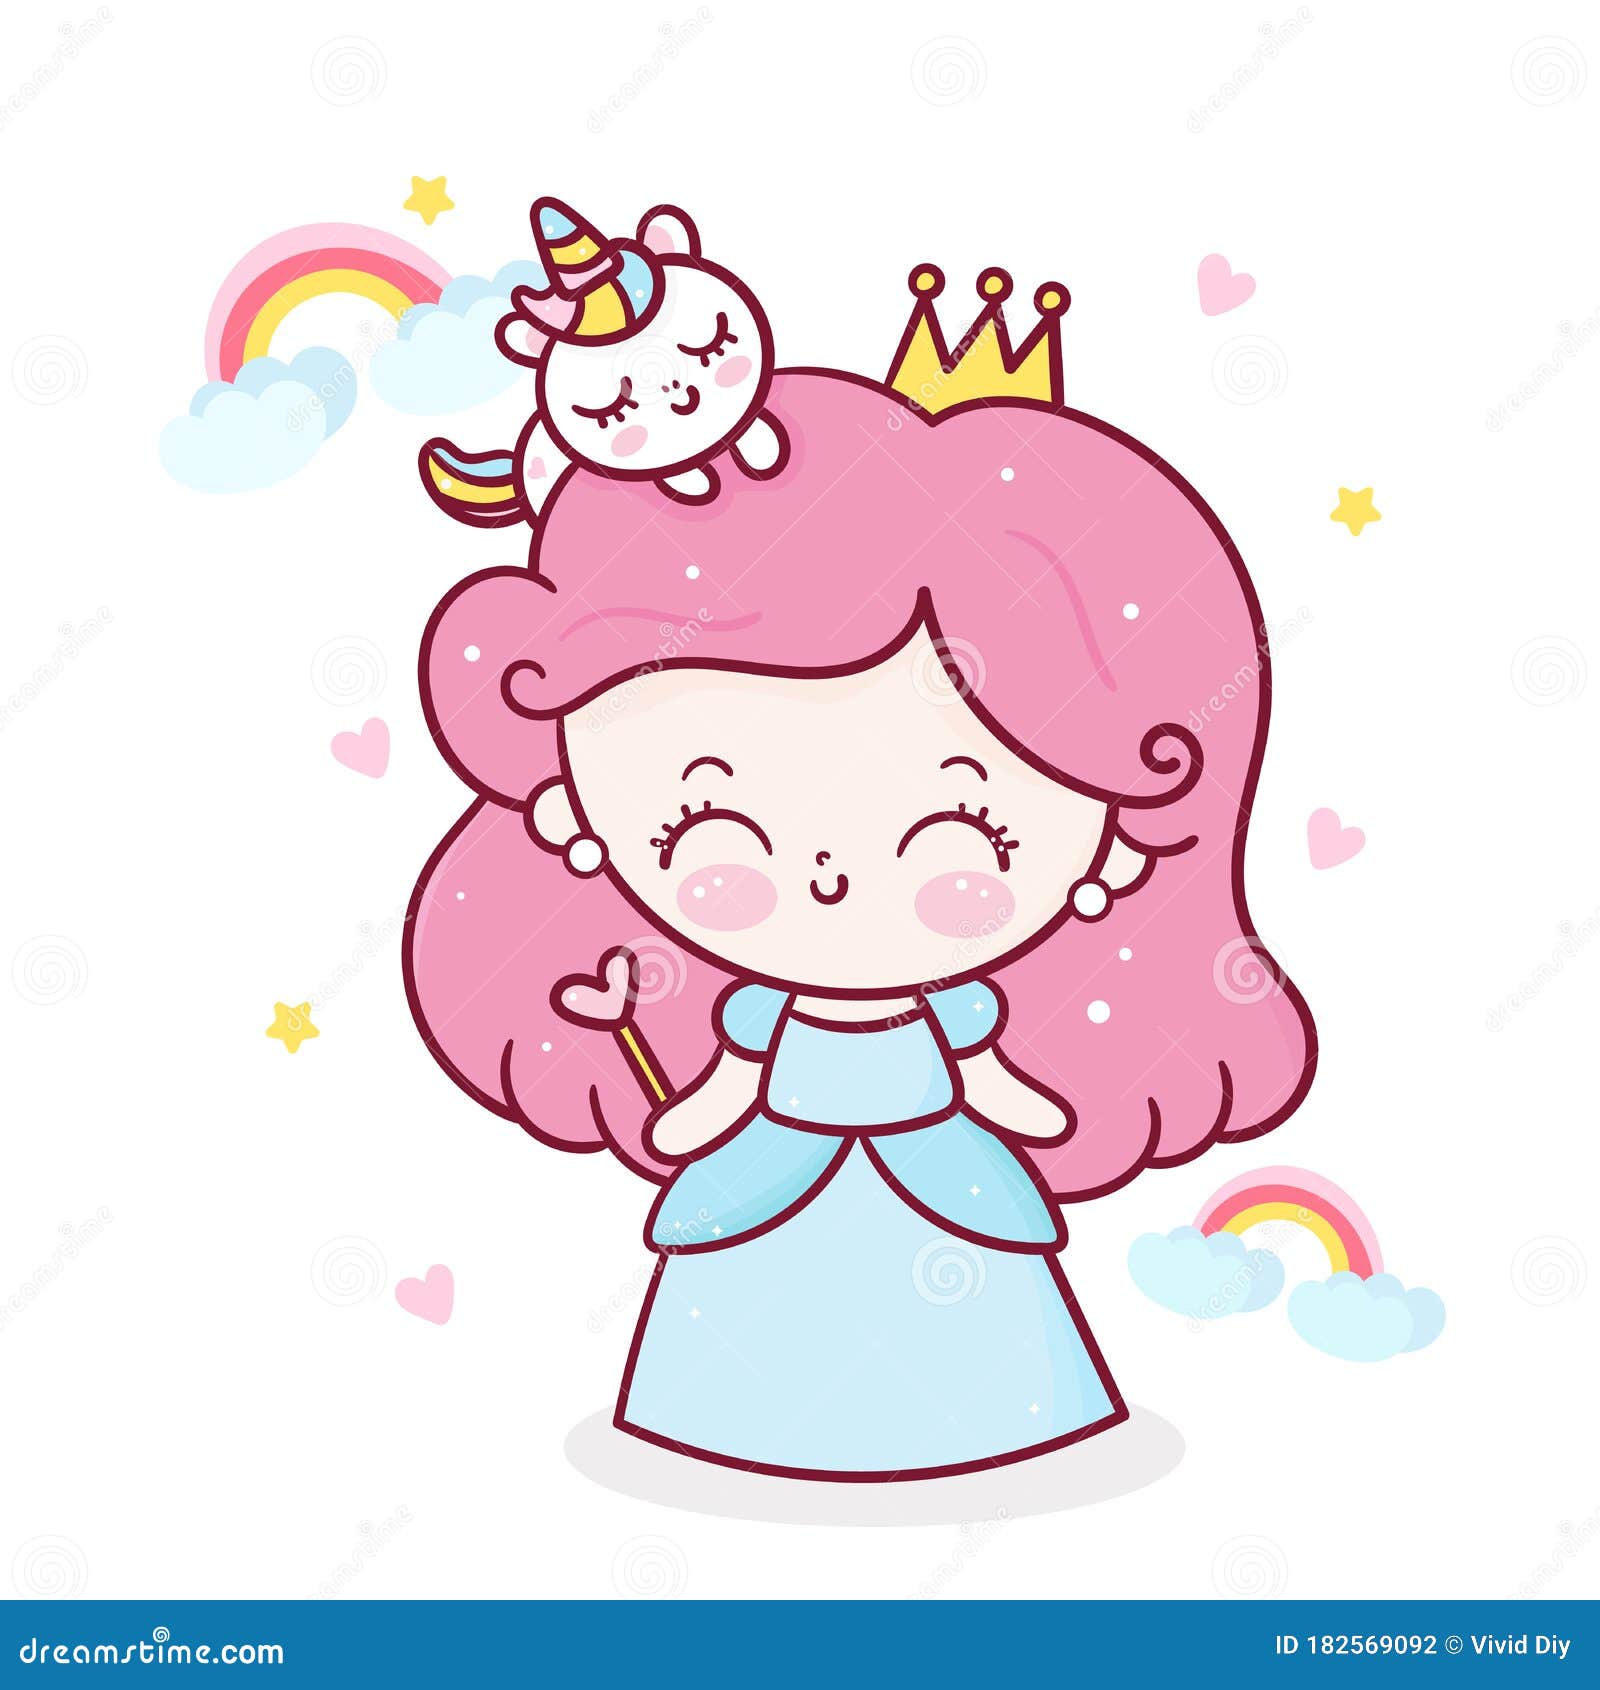 Fairy Princess Girl Cartoon and Unicorn Vector with Rainbow Friendship:  Series Kawaii Animals Character Design Stock Vector - Illustration of draw,  comic: 182569092